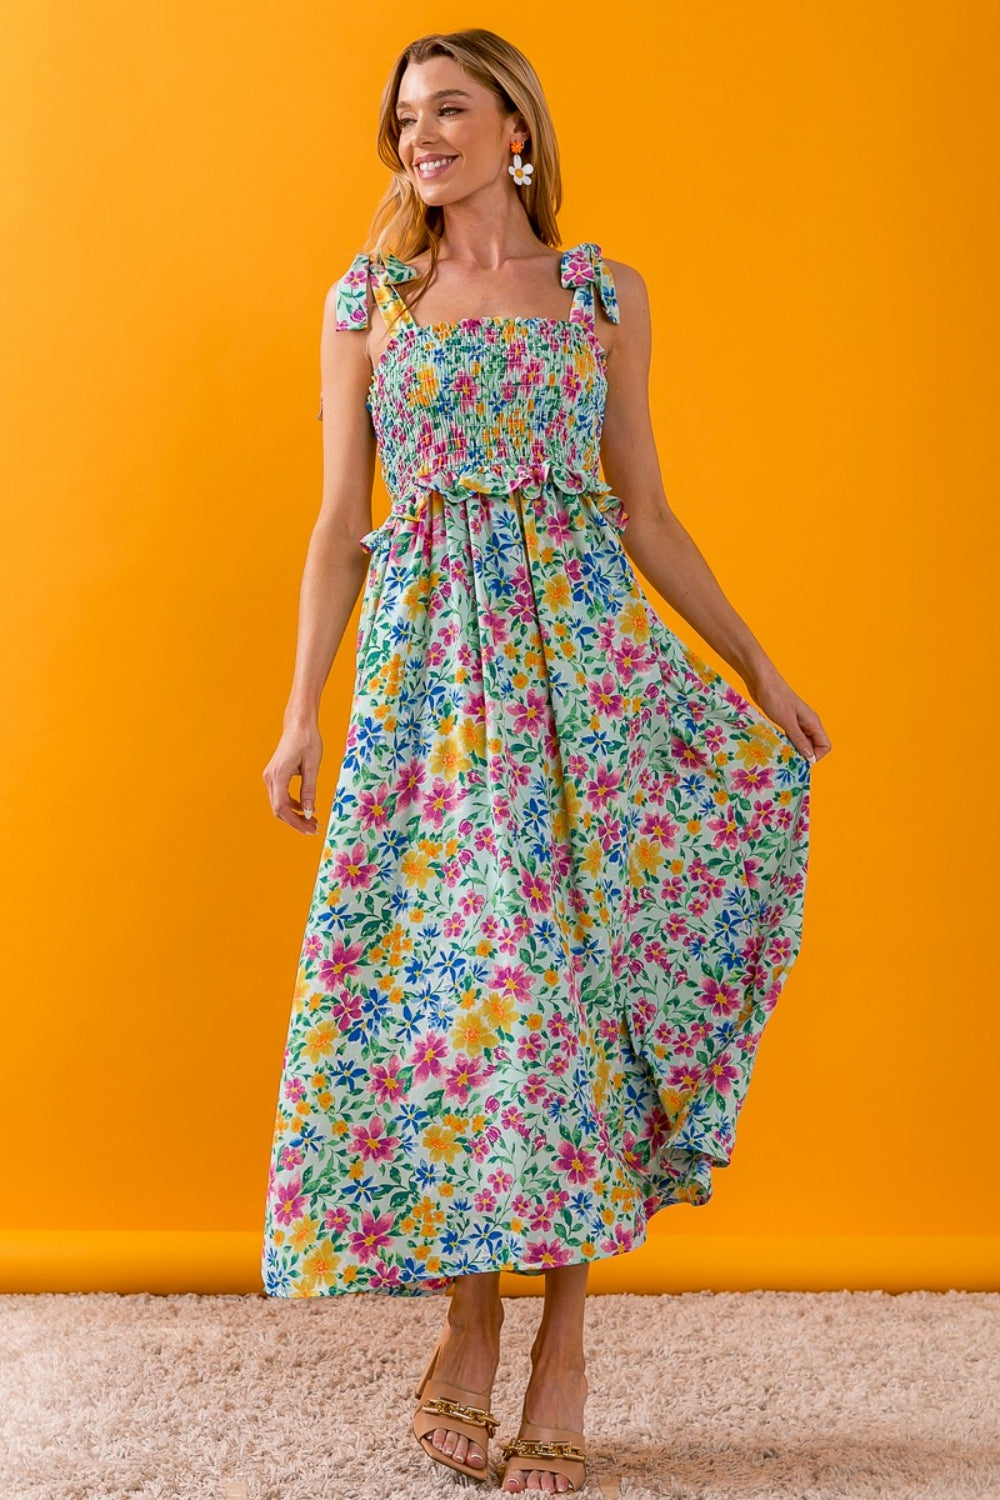 BiBi Floral Print Ruffle Trim Smocked Wide Tie Strap Cami Dress